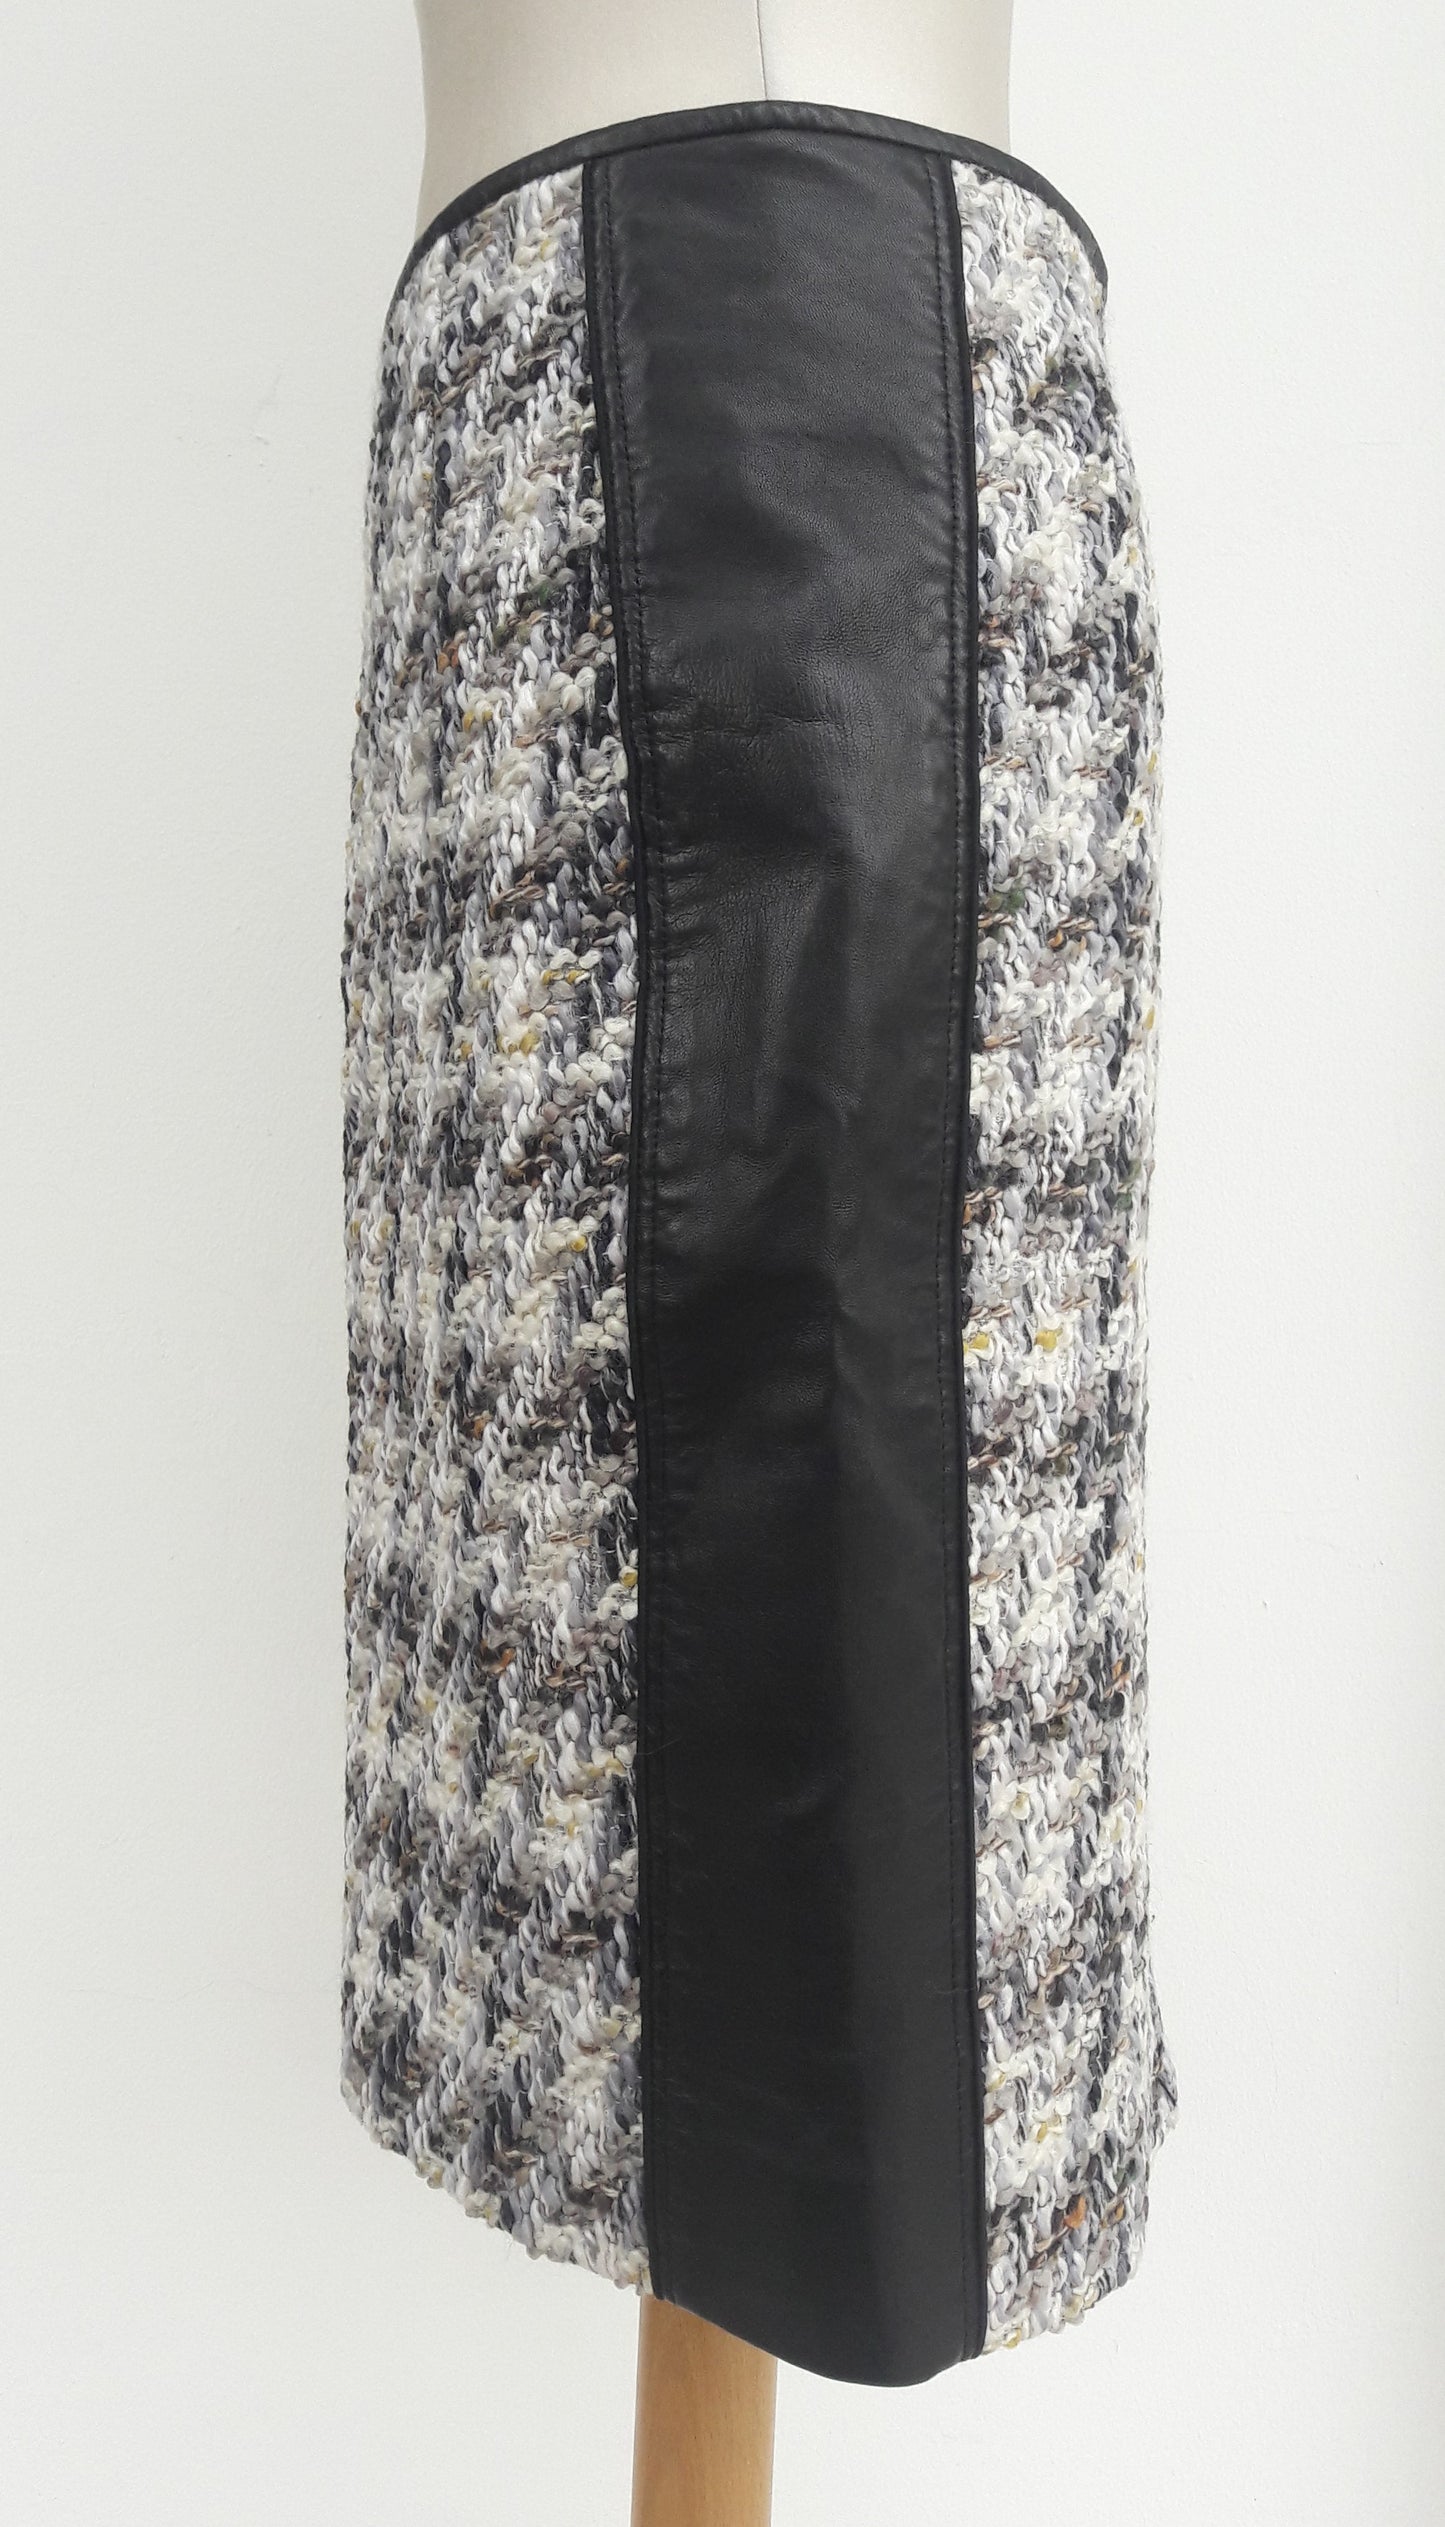 Mixed Fabric Reed Krakoff Pencil Skirt